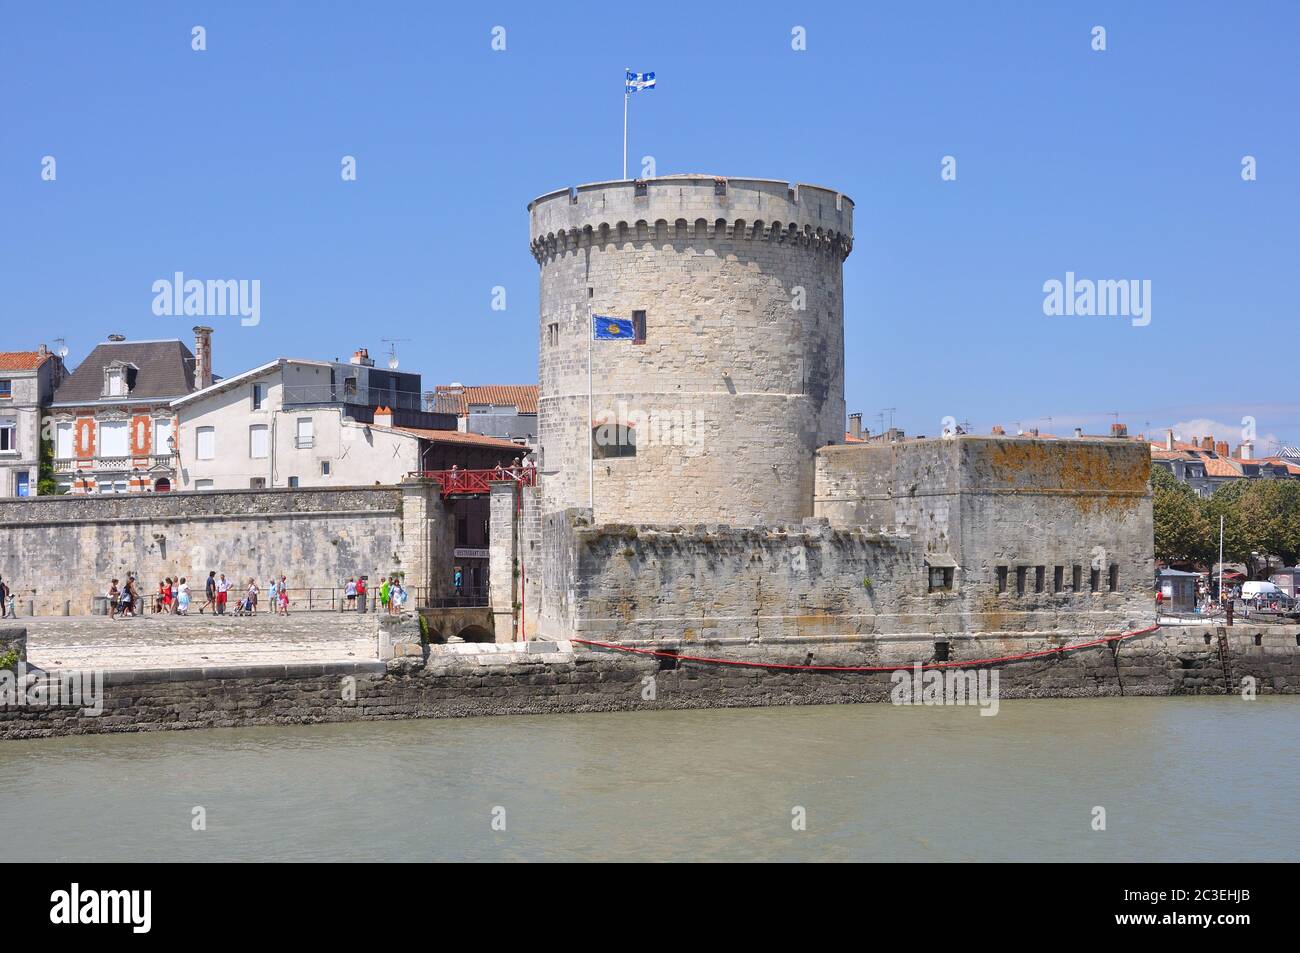 tourist site of La Rochelle, France Stock Photo